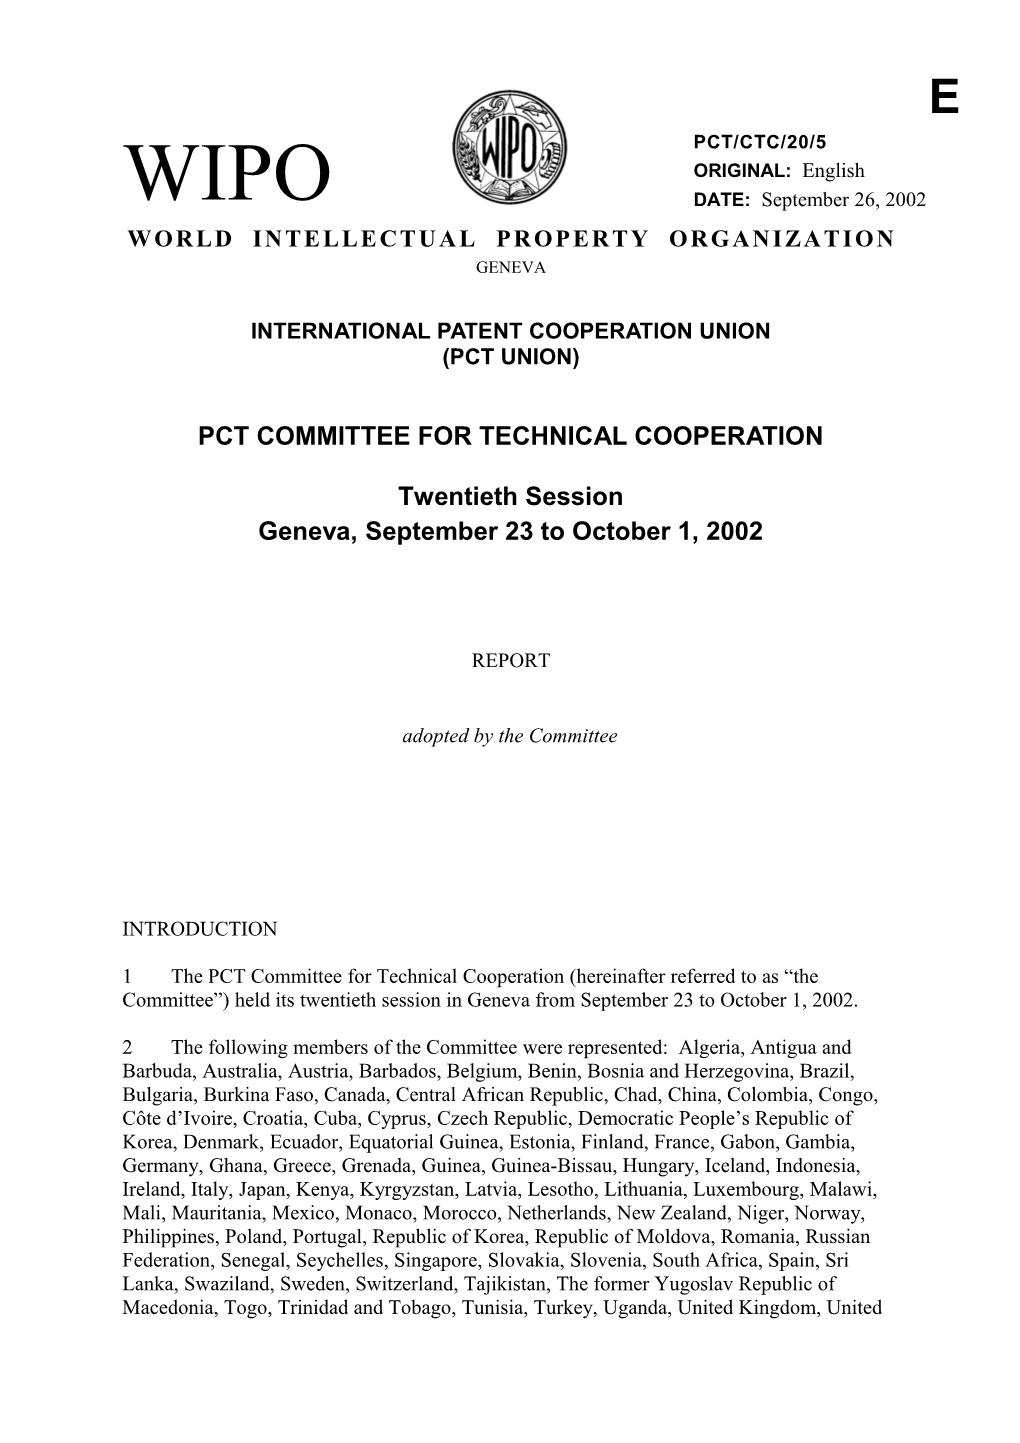 PCT/CTC/20/5: Report